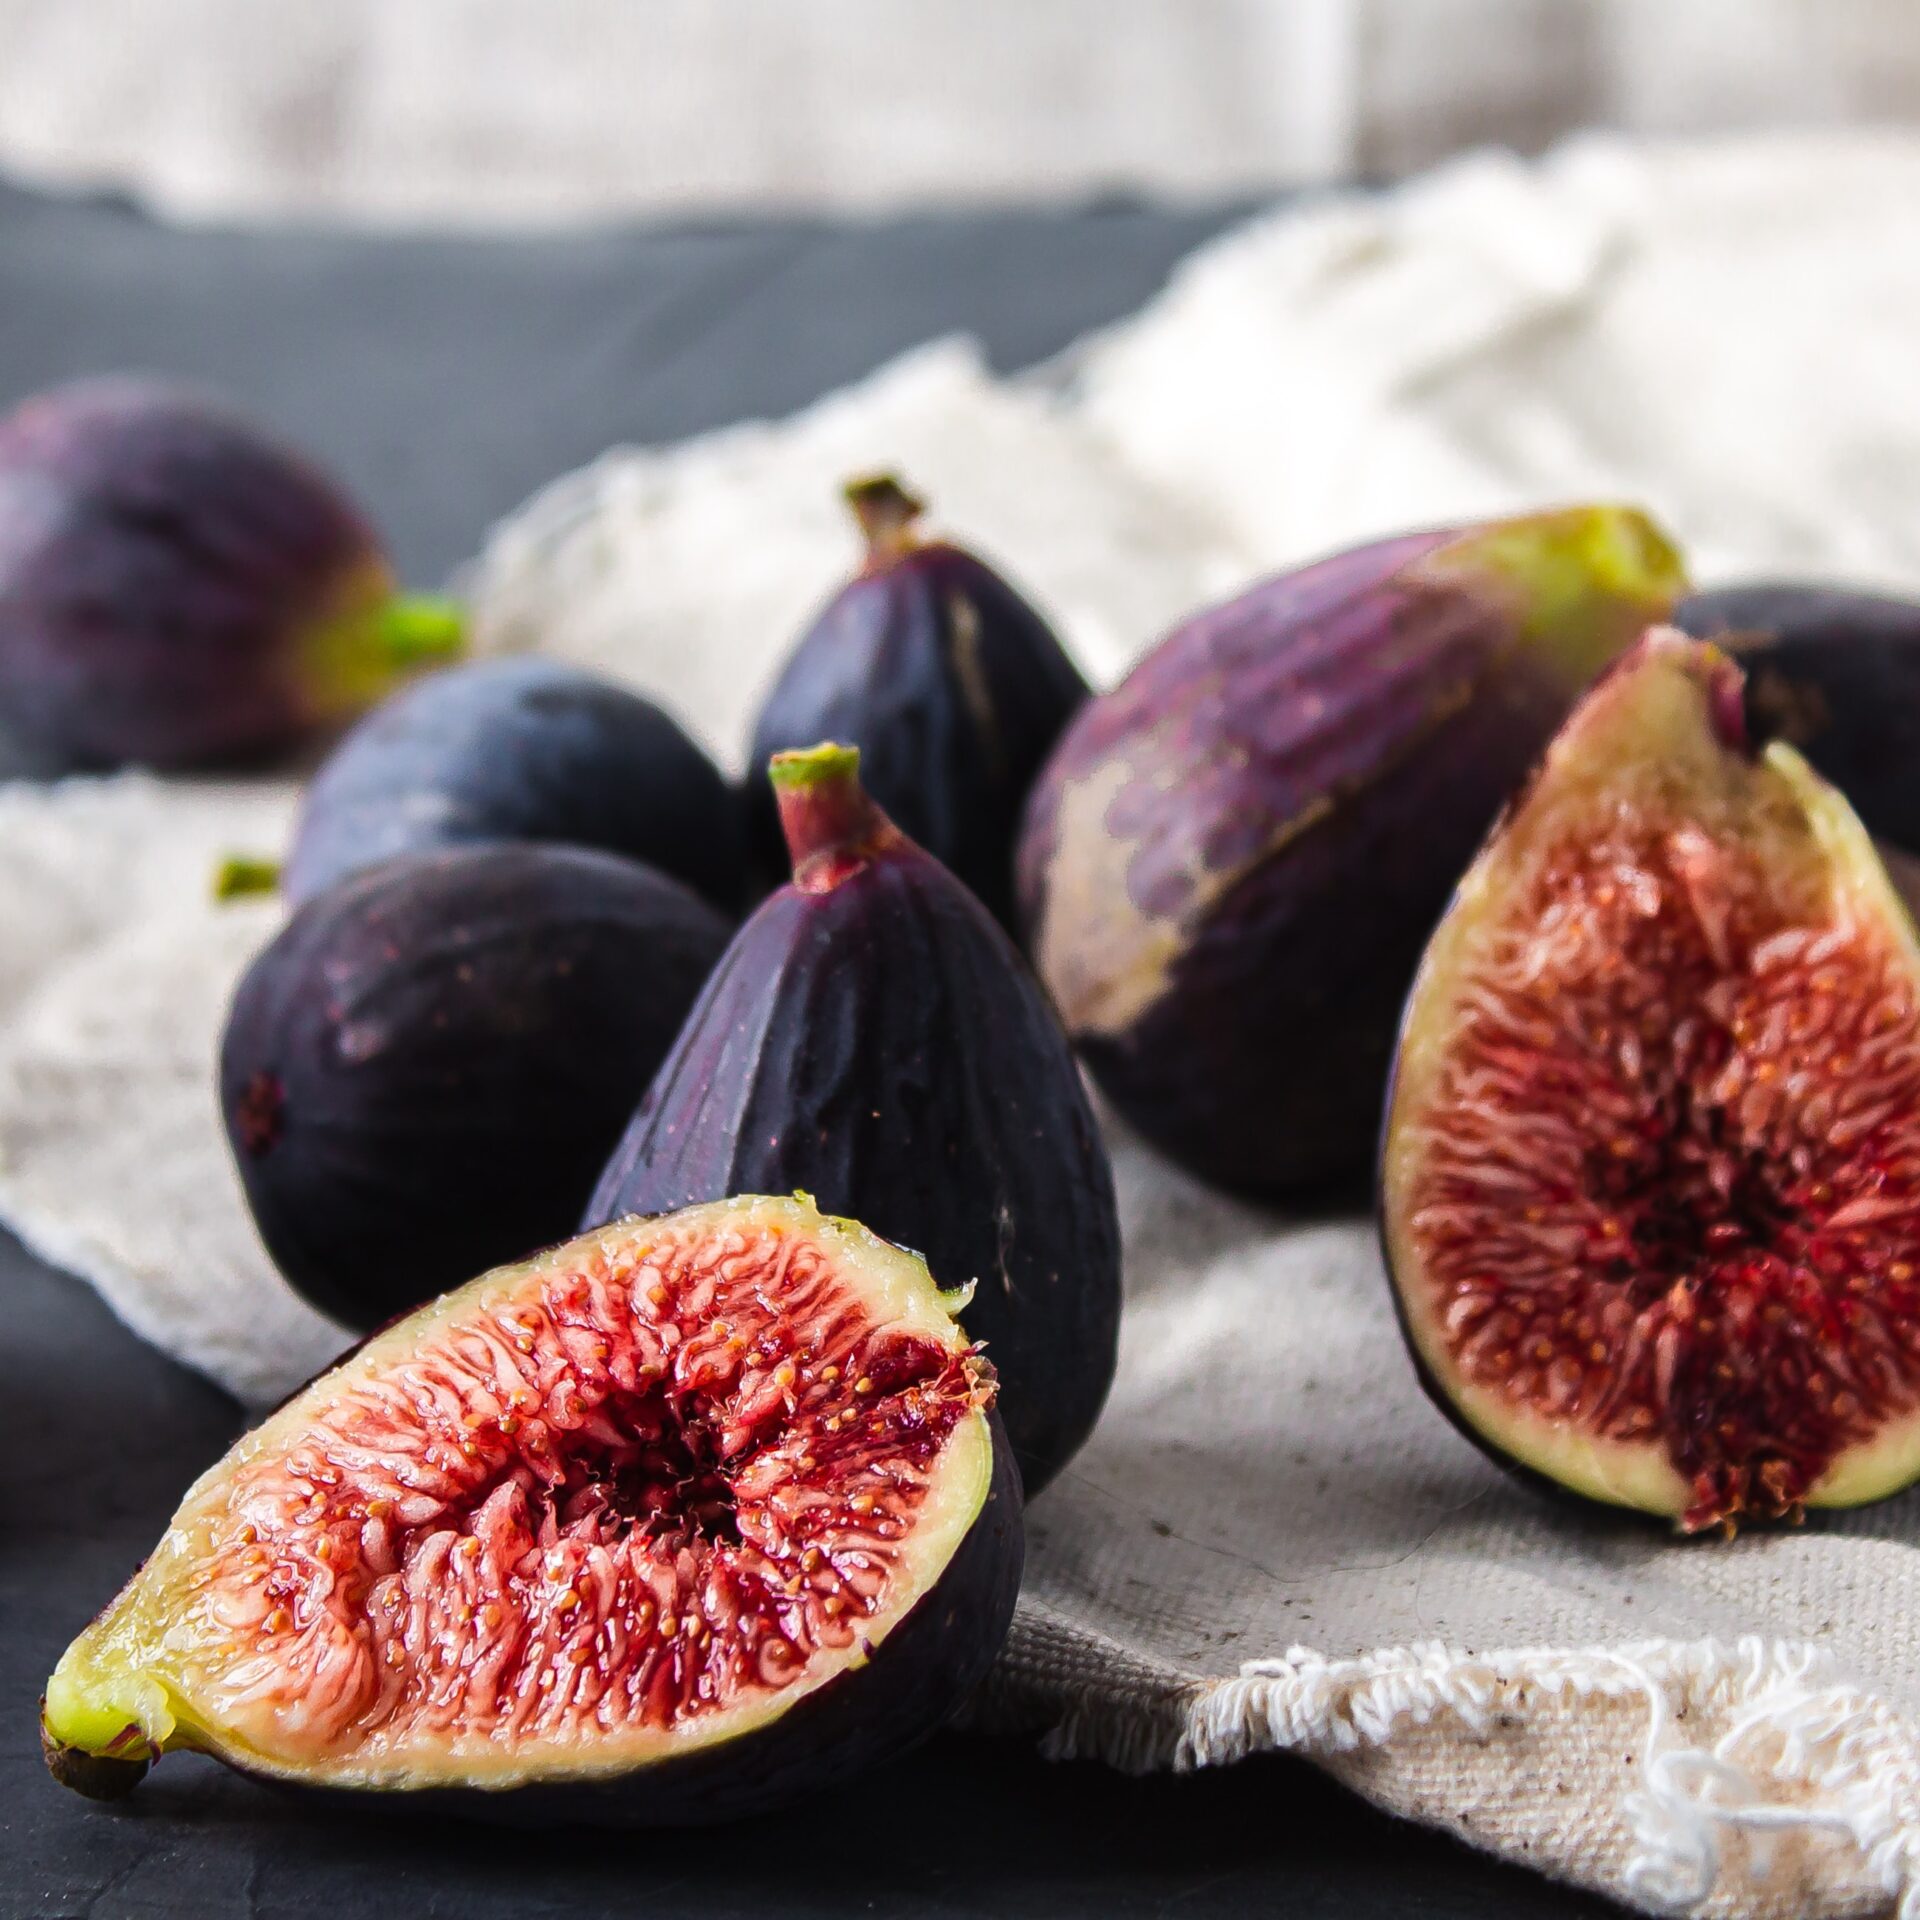 fresh, bright figs